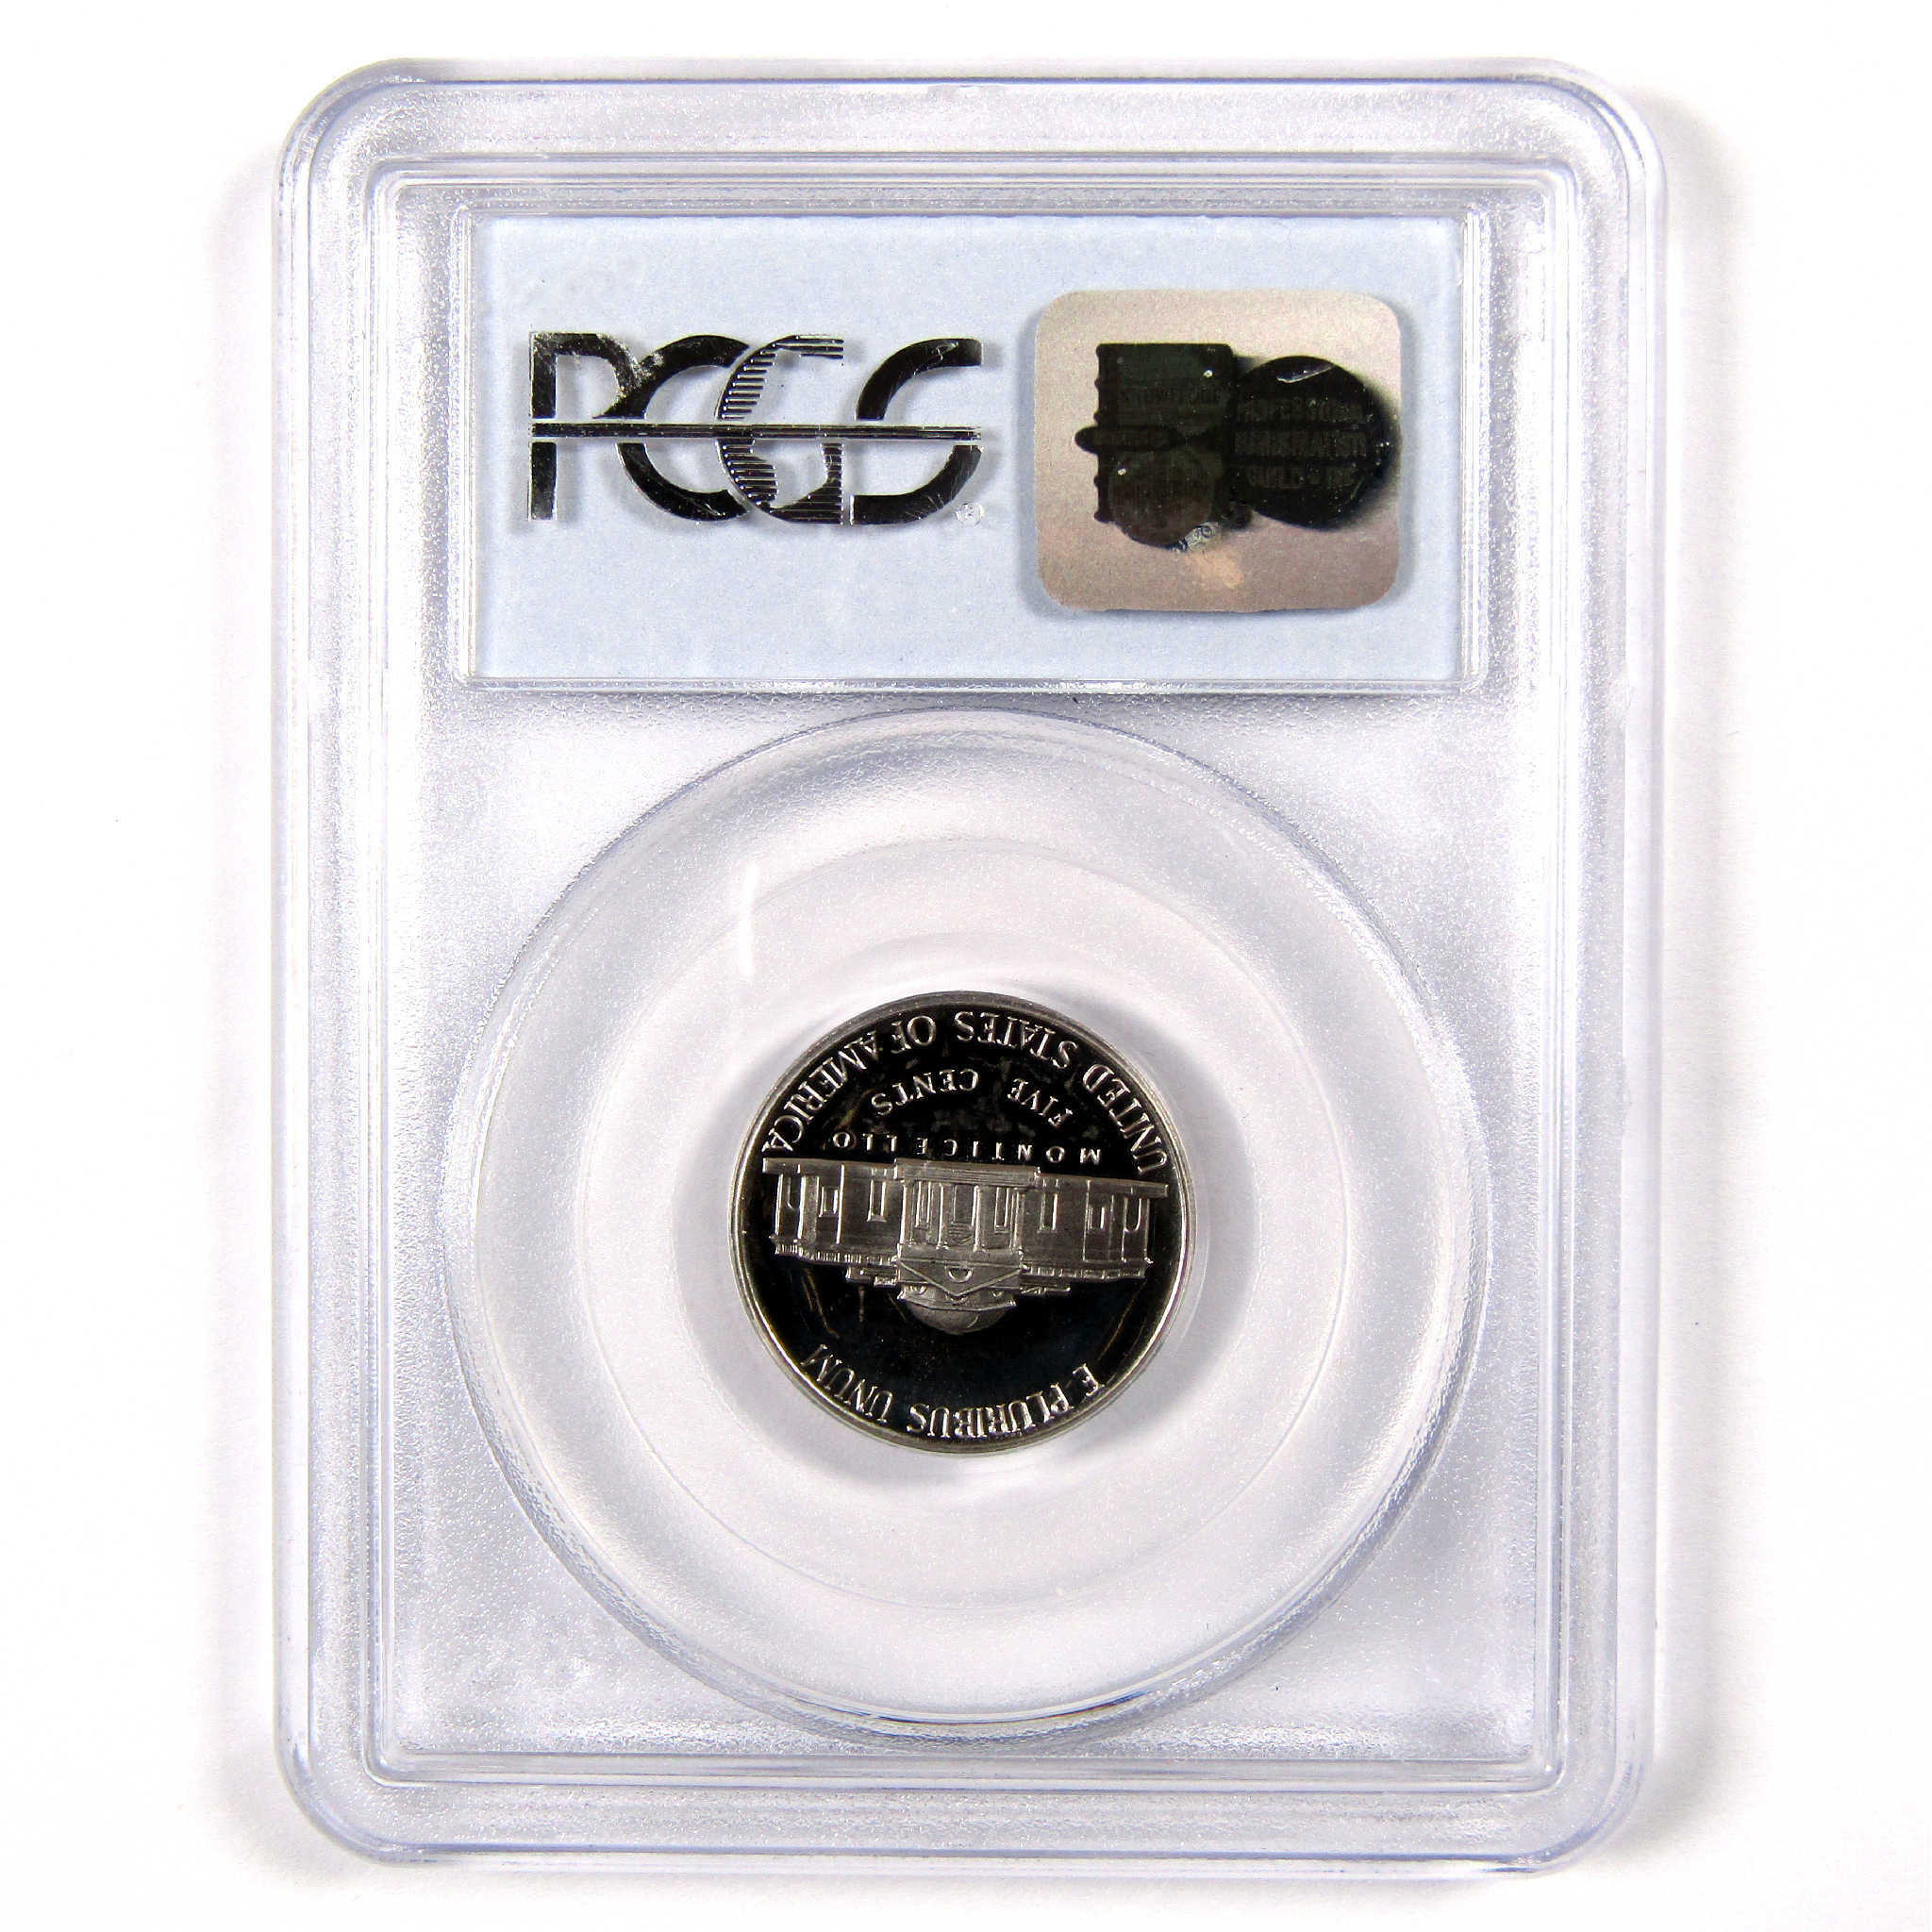 1986 S Jefferson Nickel PR 69 DCAM PCGS 5c Proof Coin SKU:CPC5052